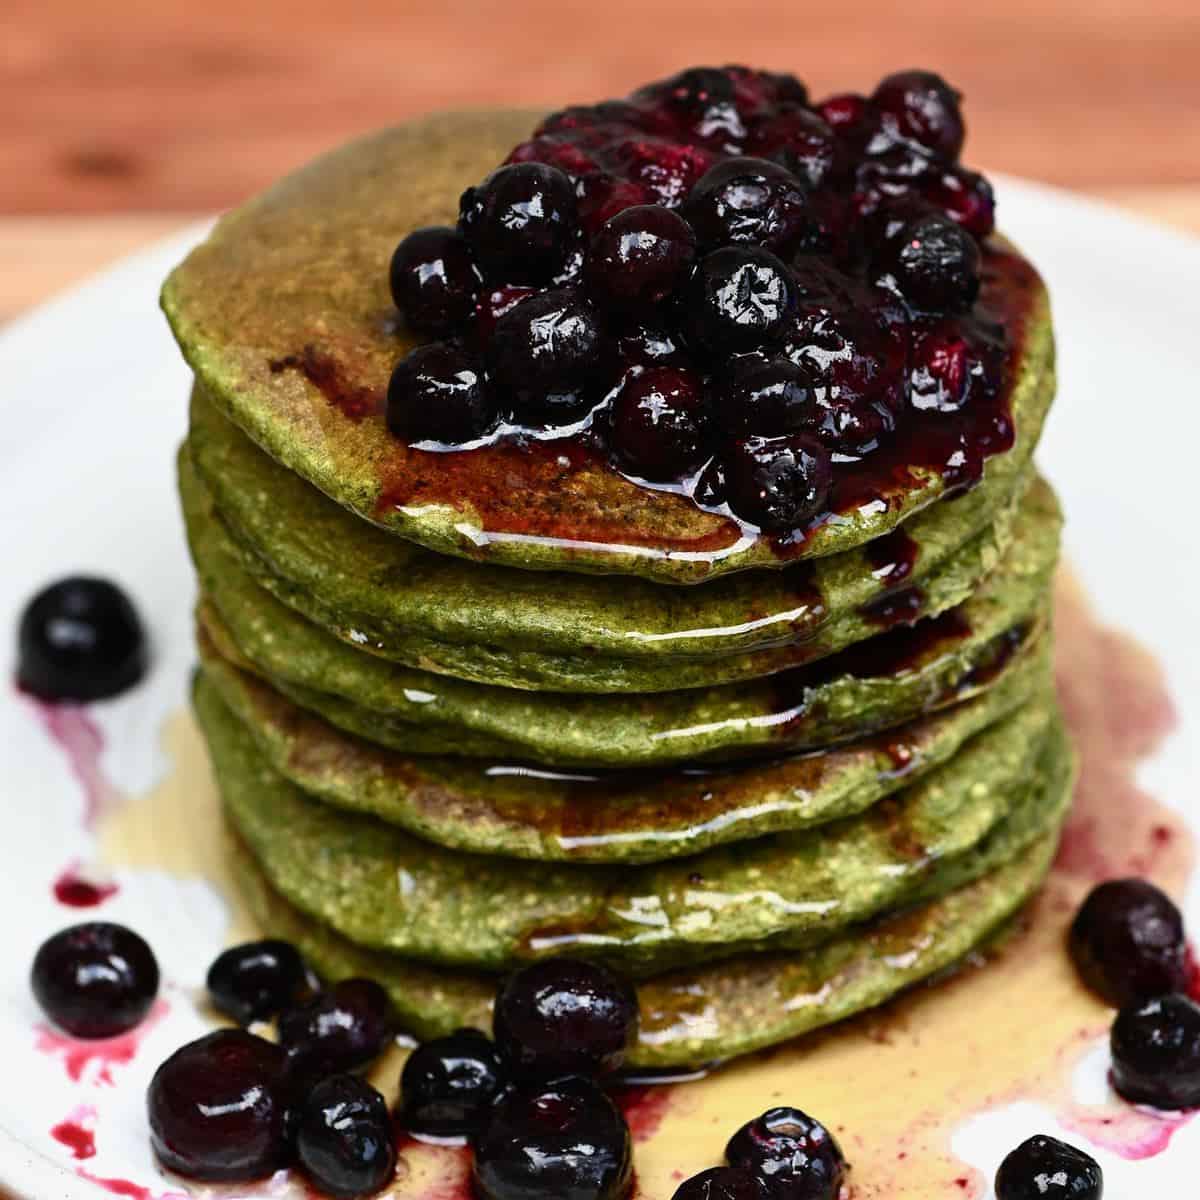 https://www.alphafoodie.com/wp-content/uploads/2021/03/Green-Pancakes-1-of-1.jpeg